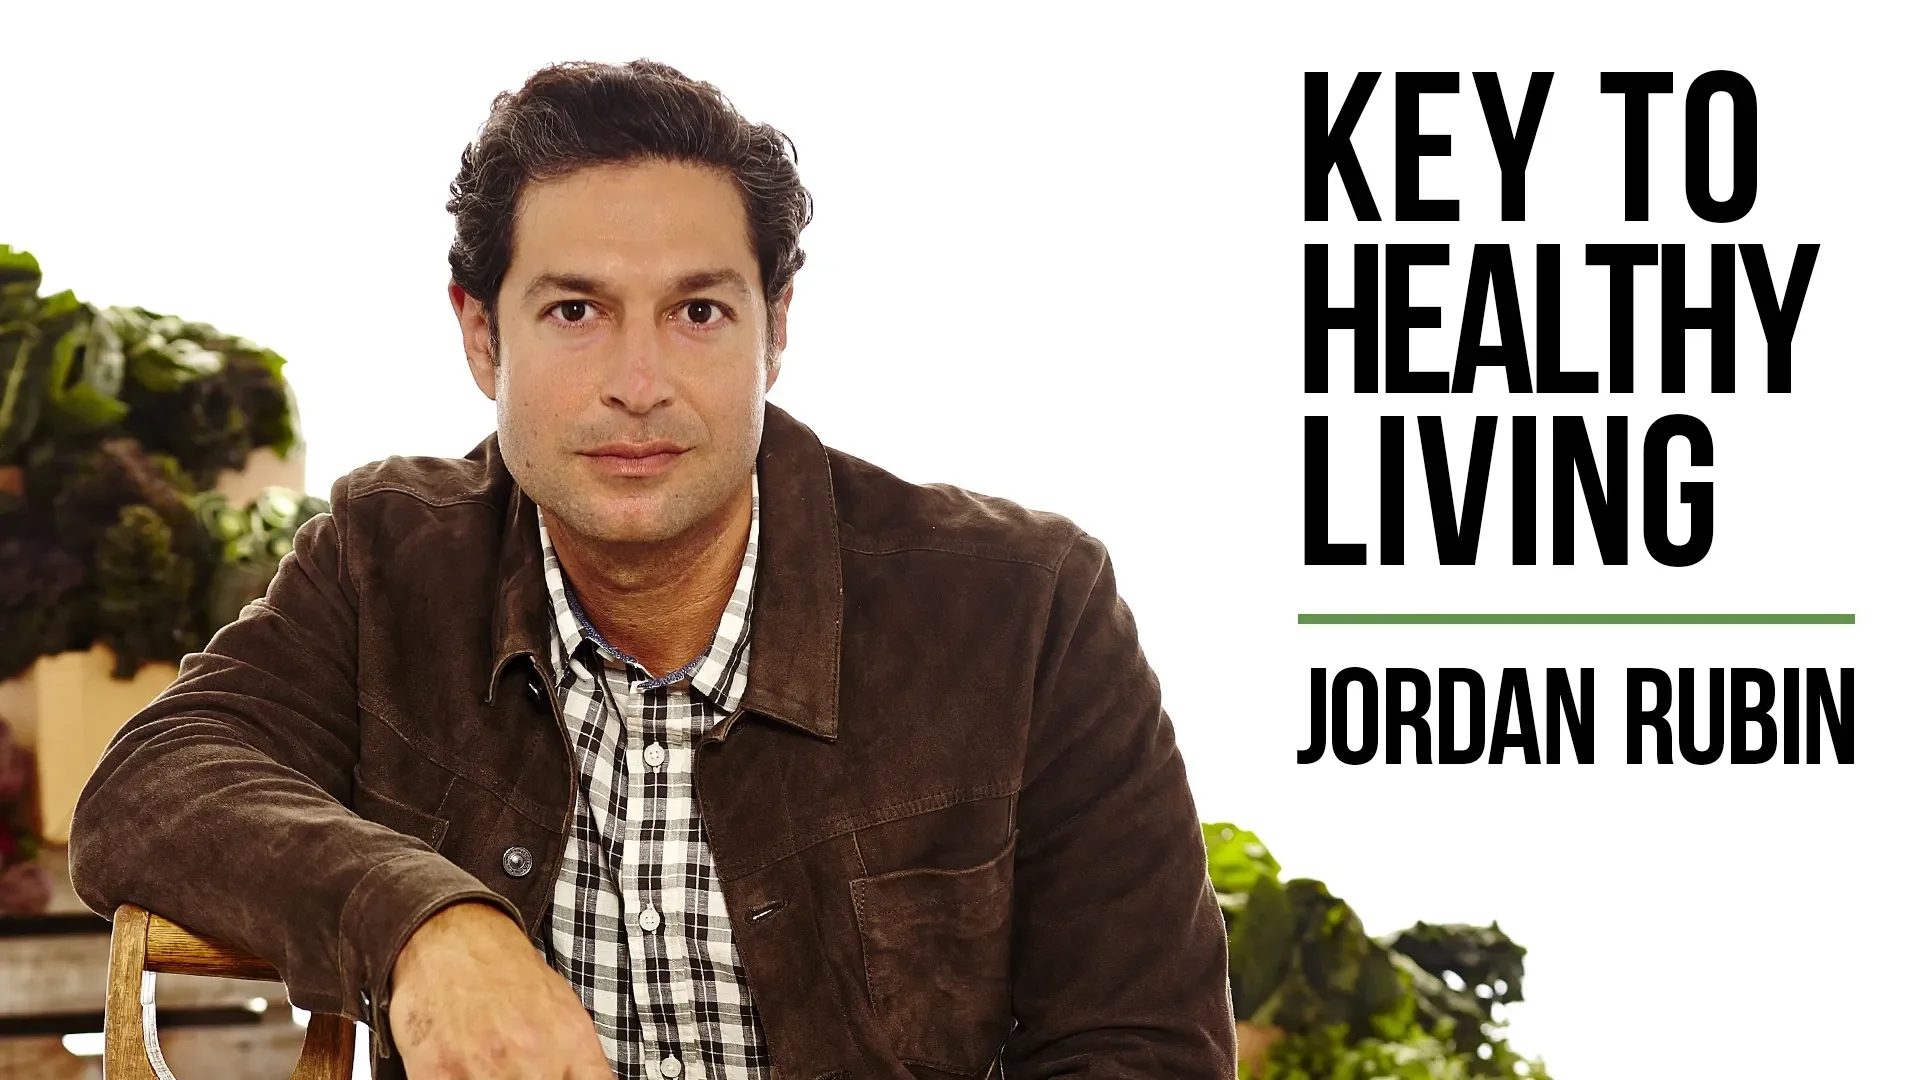 Jordan Rubin: Key to Healthy Living